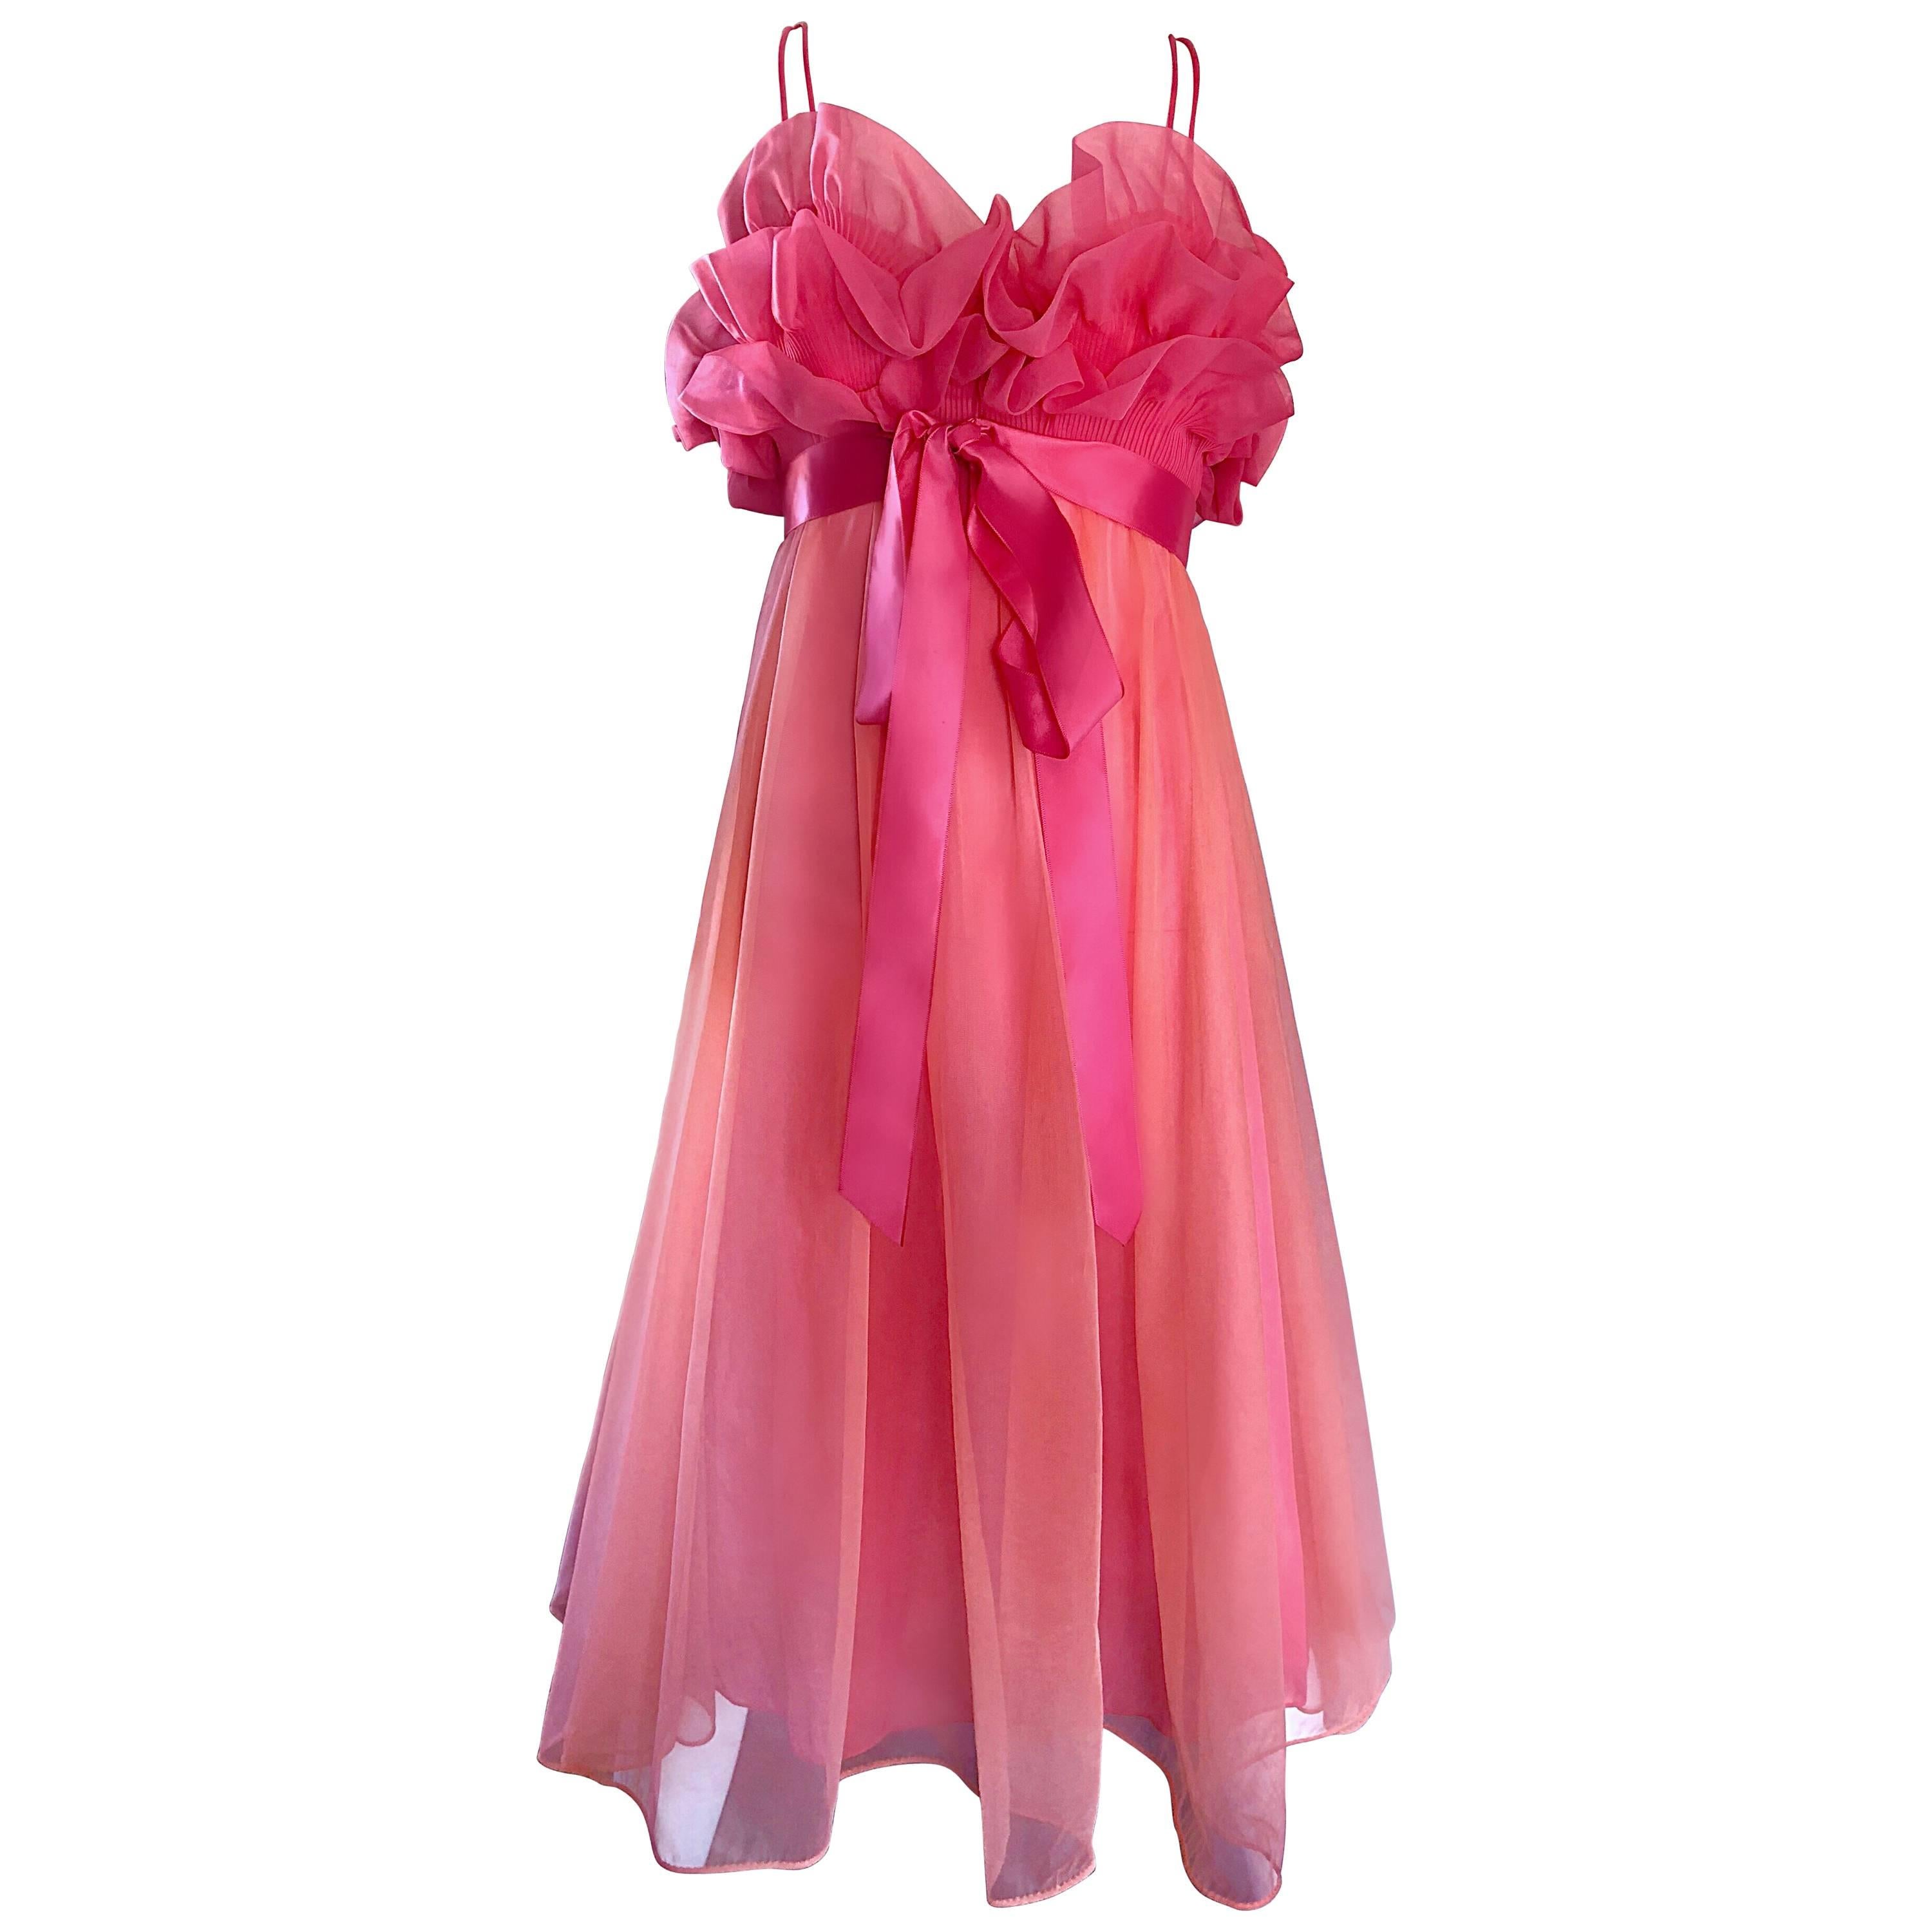 1960s Vanity Fair Negligee Peignoir Hot Pink Ruffled Nightgown Dress